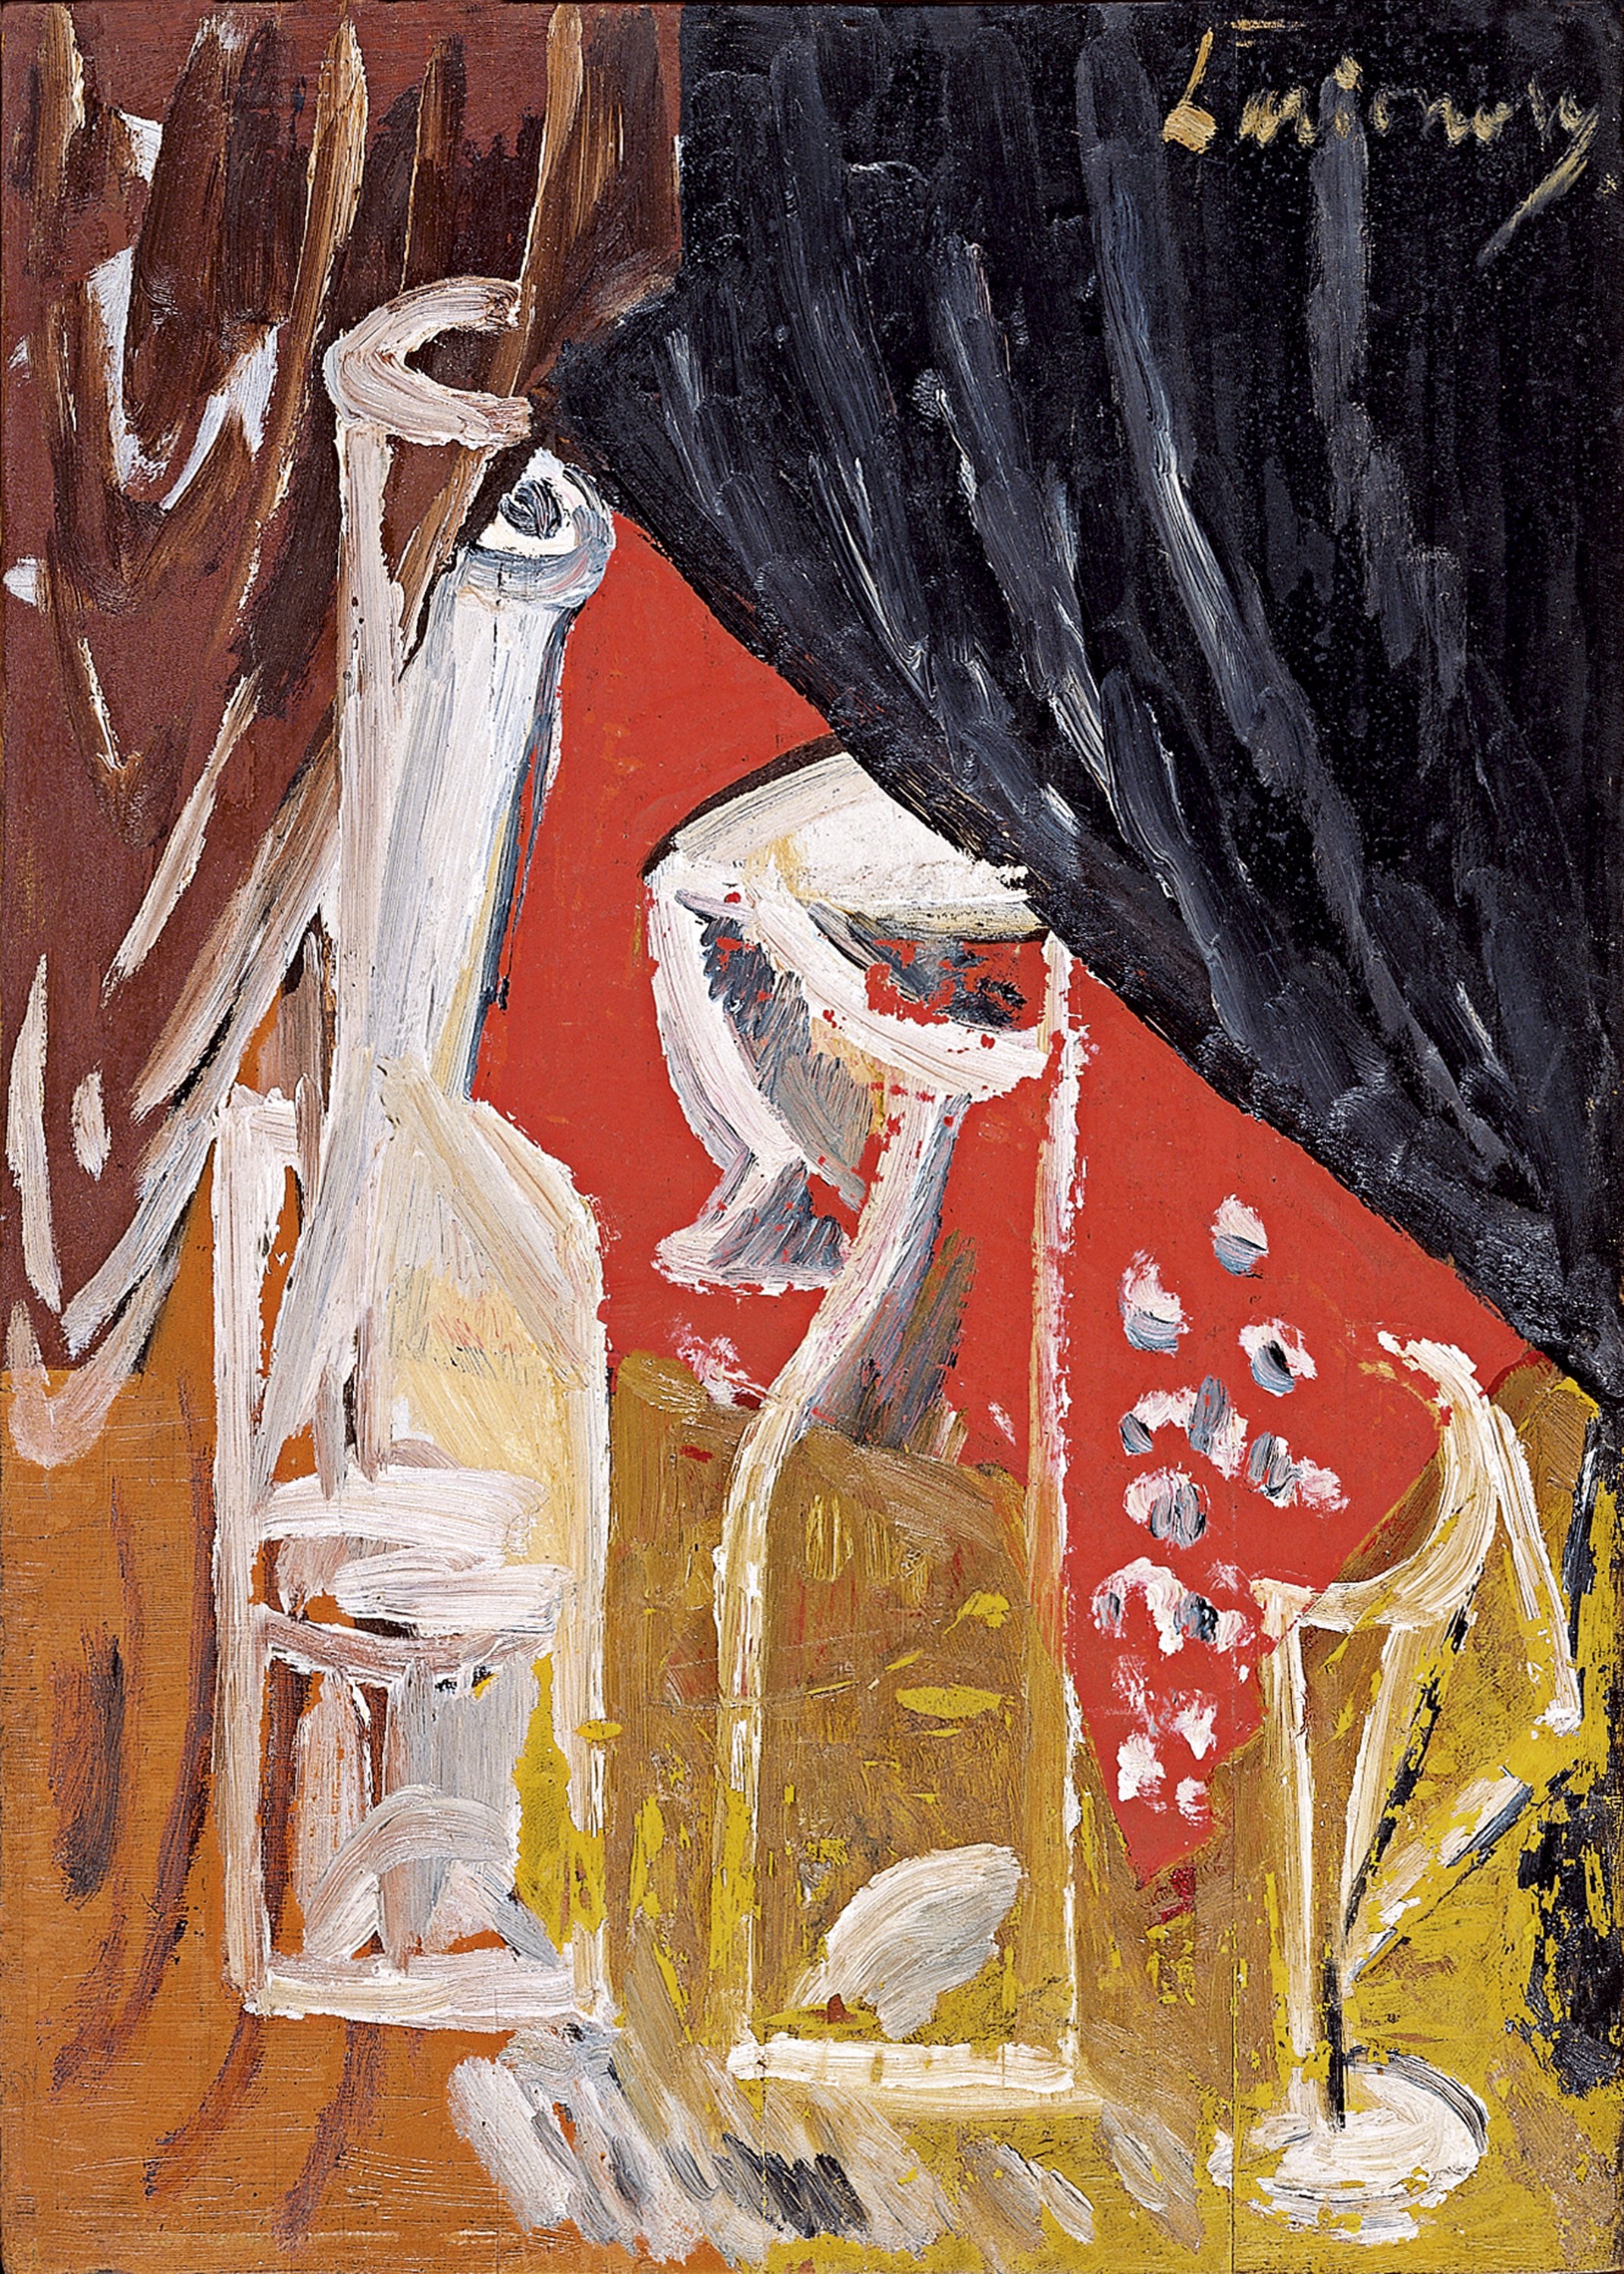 Still Life with Carafe and Curtains. Bodegón con botella y cortinas, c. 1914